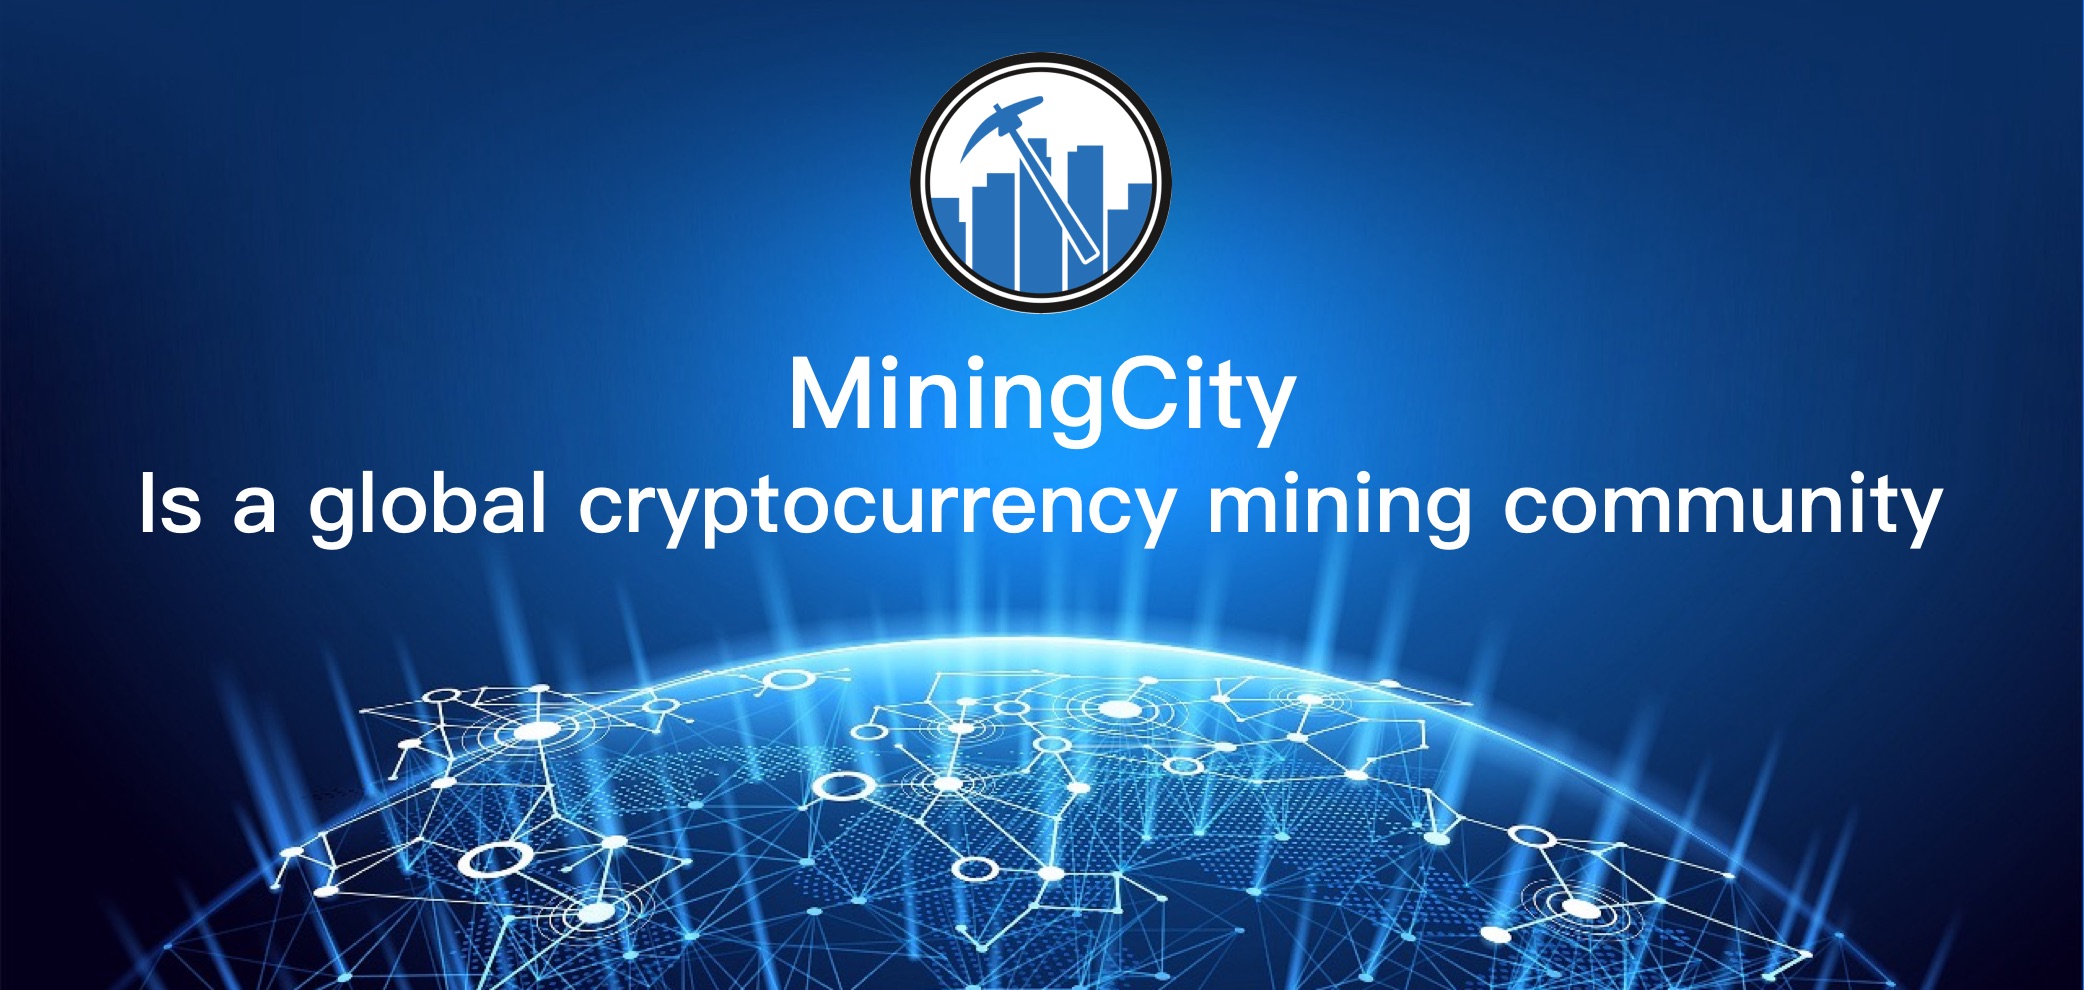 www.miningcity.org